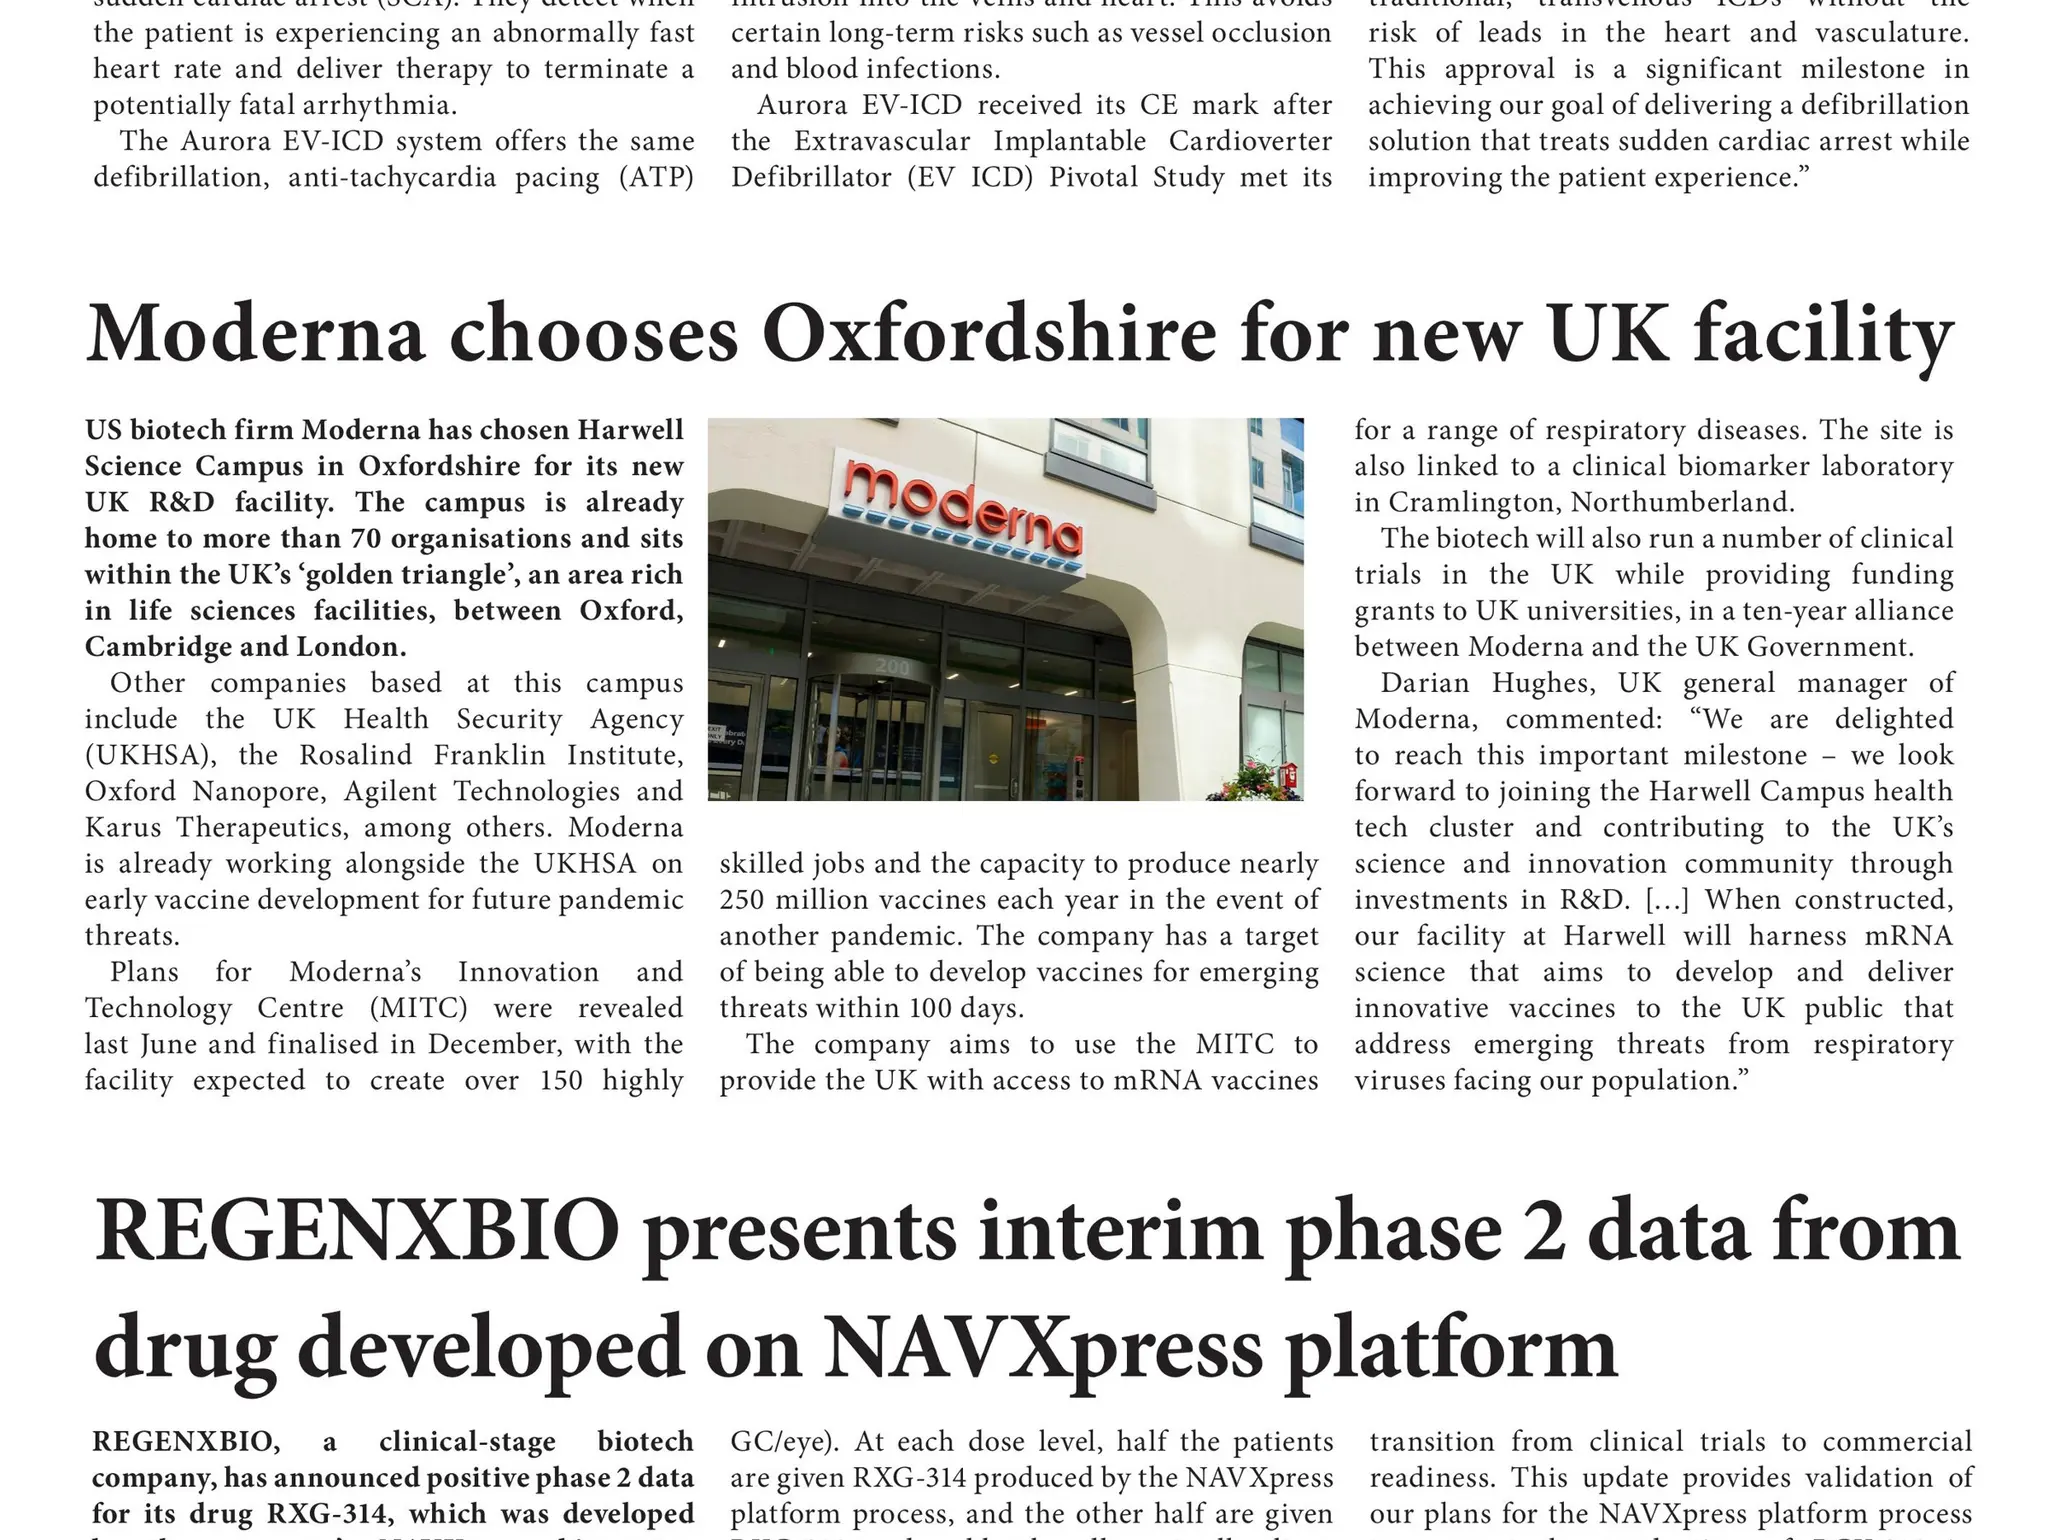 REGENXBIO presents interim phase 2 data from drug developed on NAVXpress platform